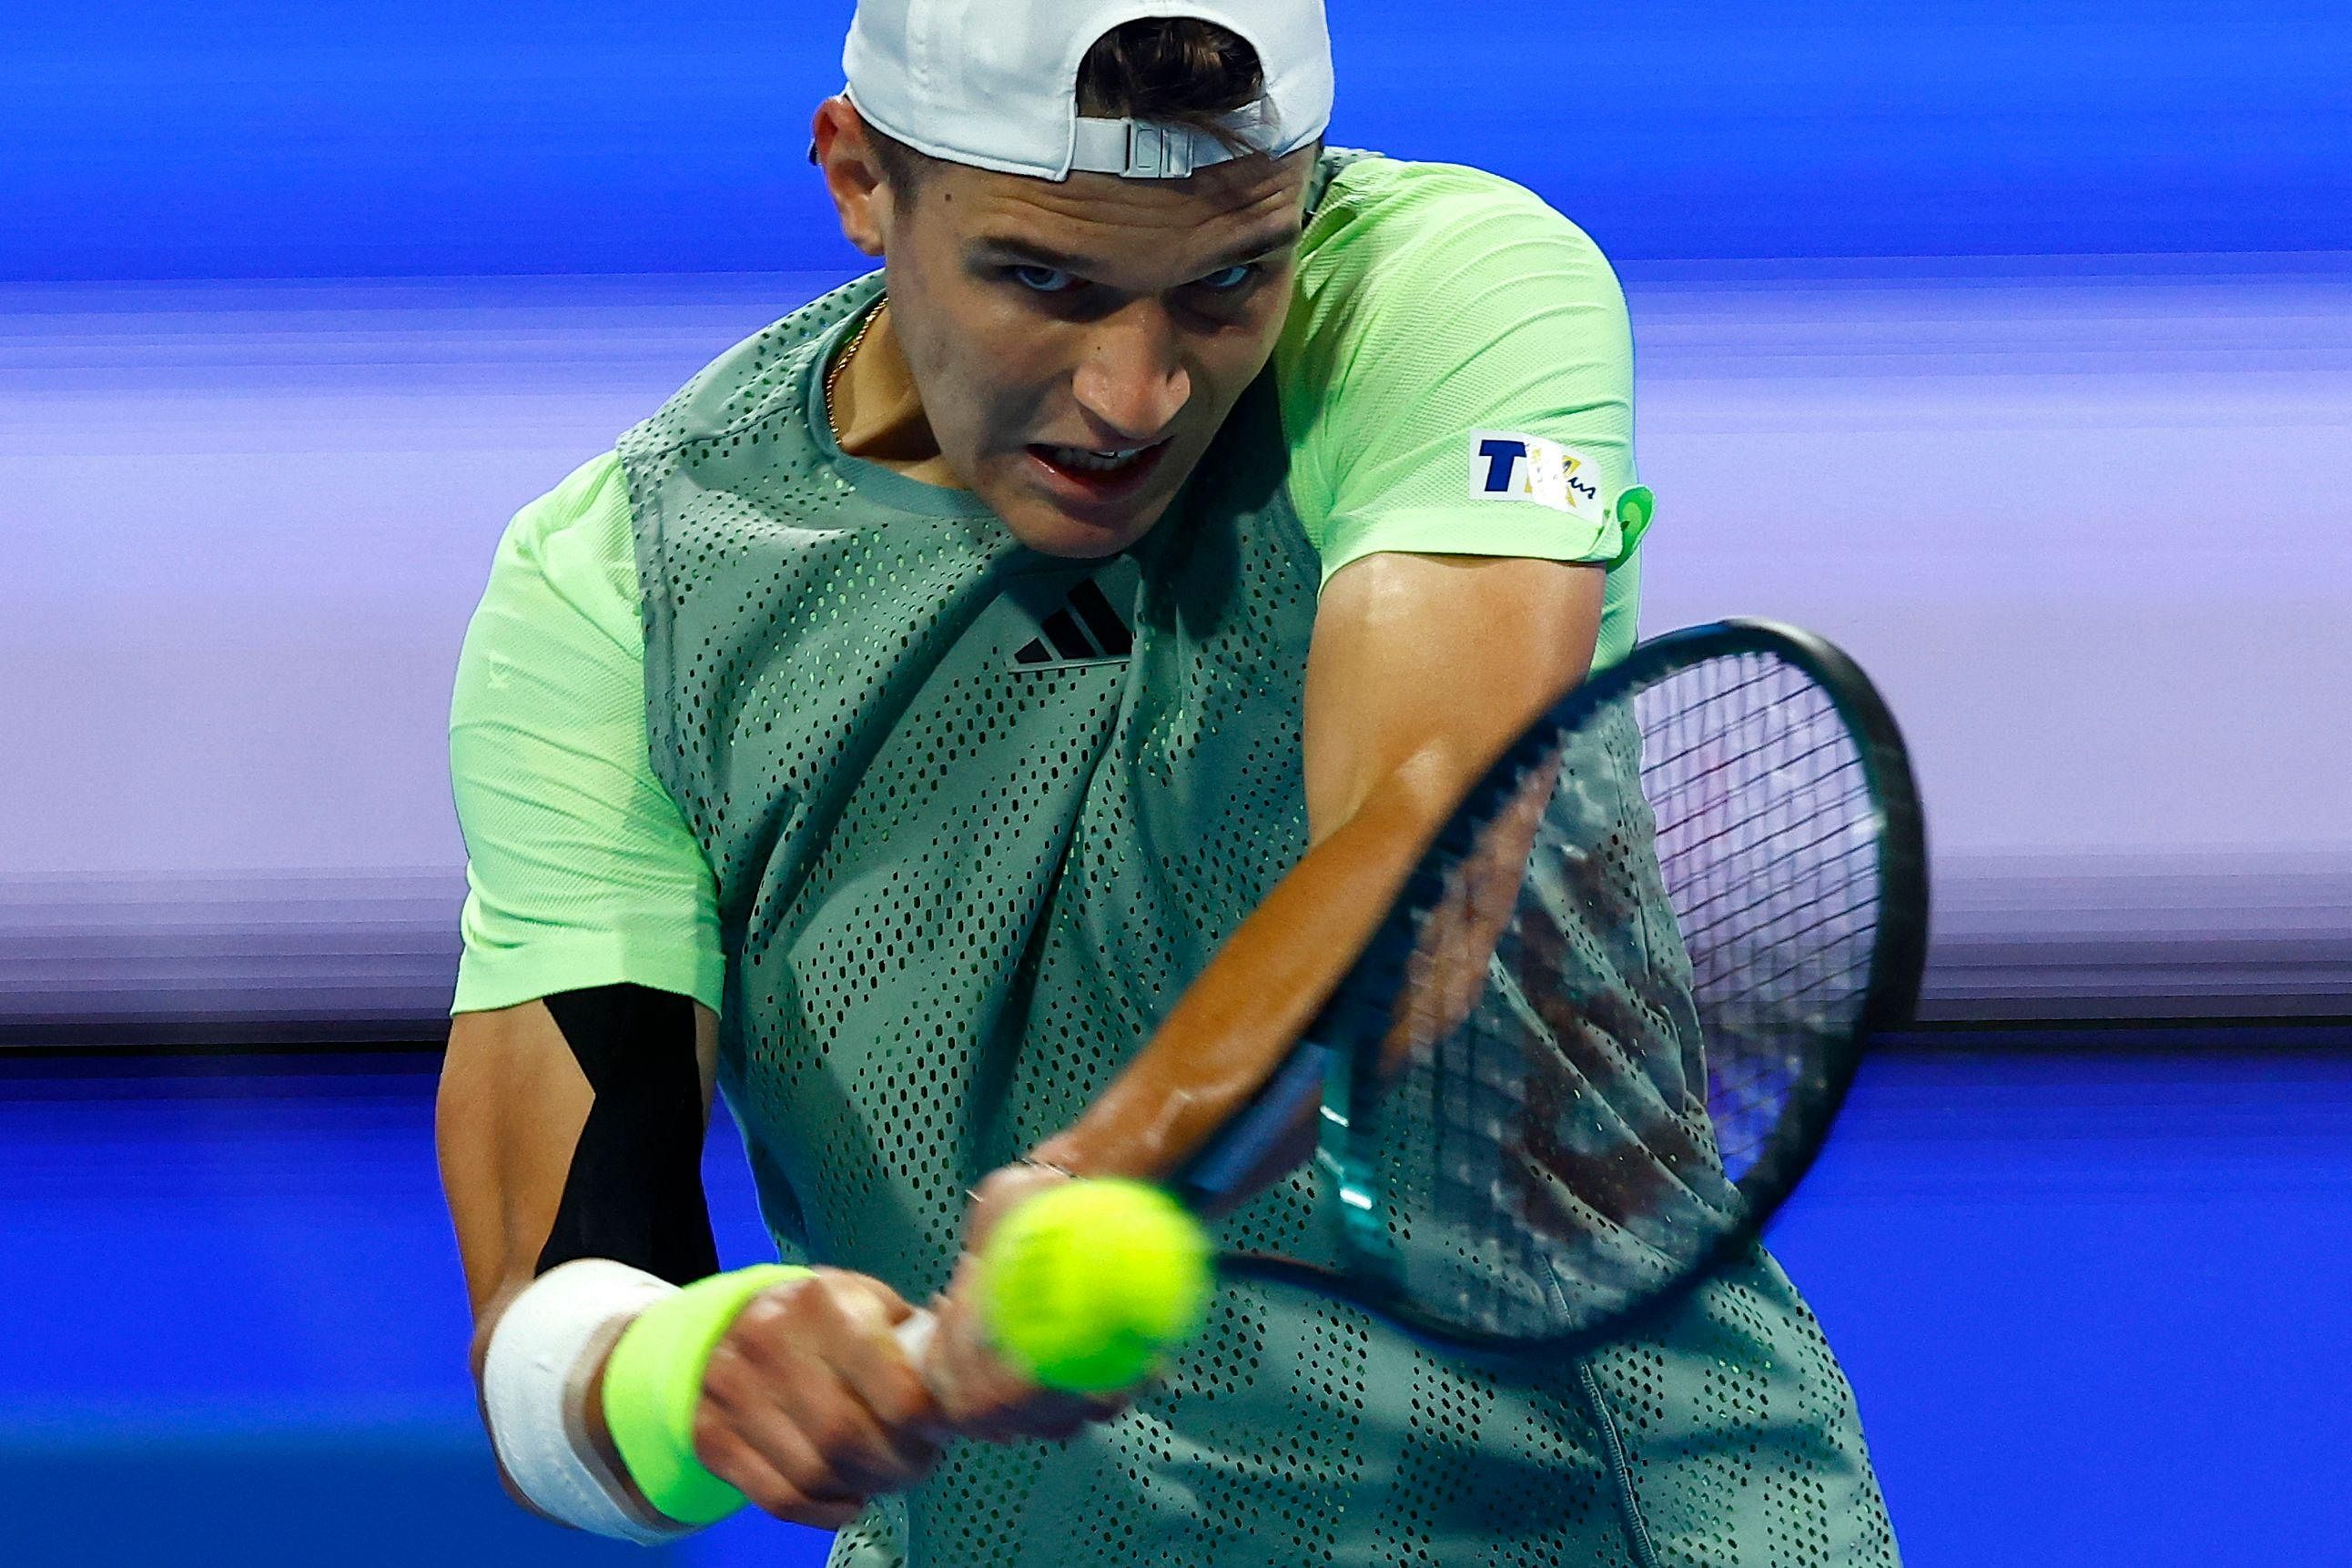 Jakub Mensik, 18, follows in footsteps of Carlos Alcaraz to reach first ATP final